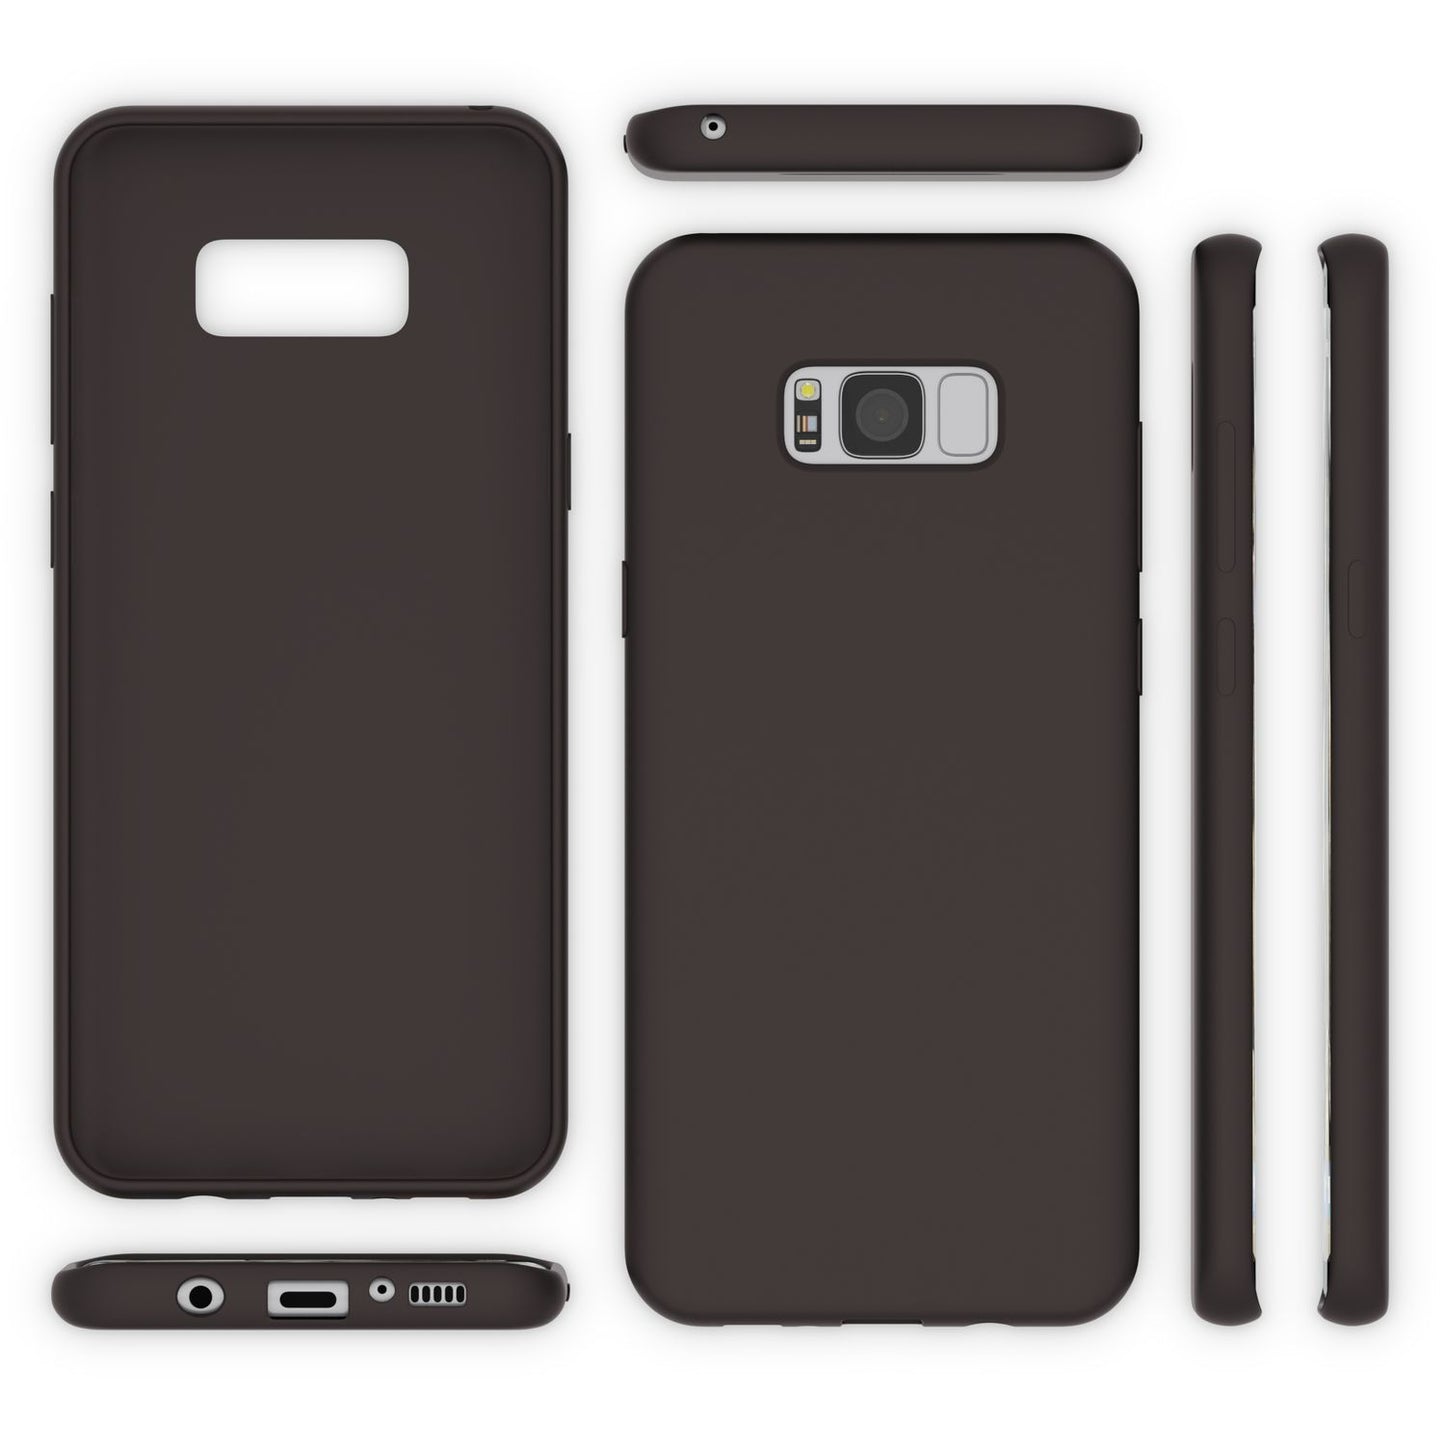 Samsung Galaxy S8 Plus Handy Hülle von NALIA, Ultra-Slim TPU Silikon Neon Case